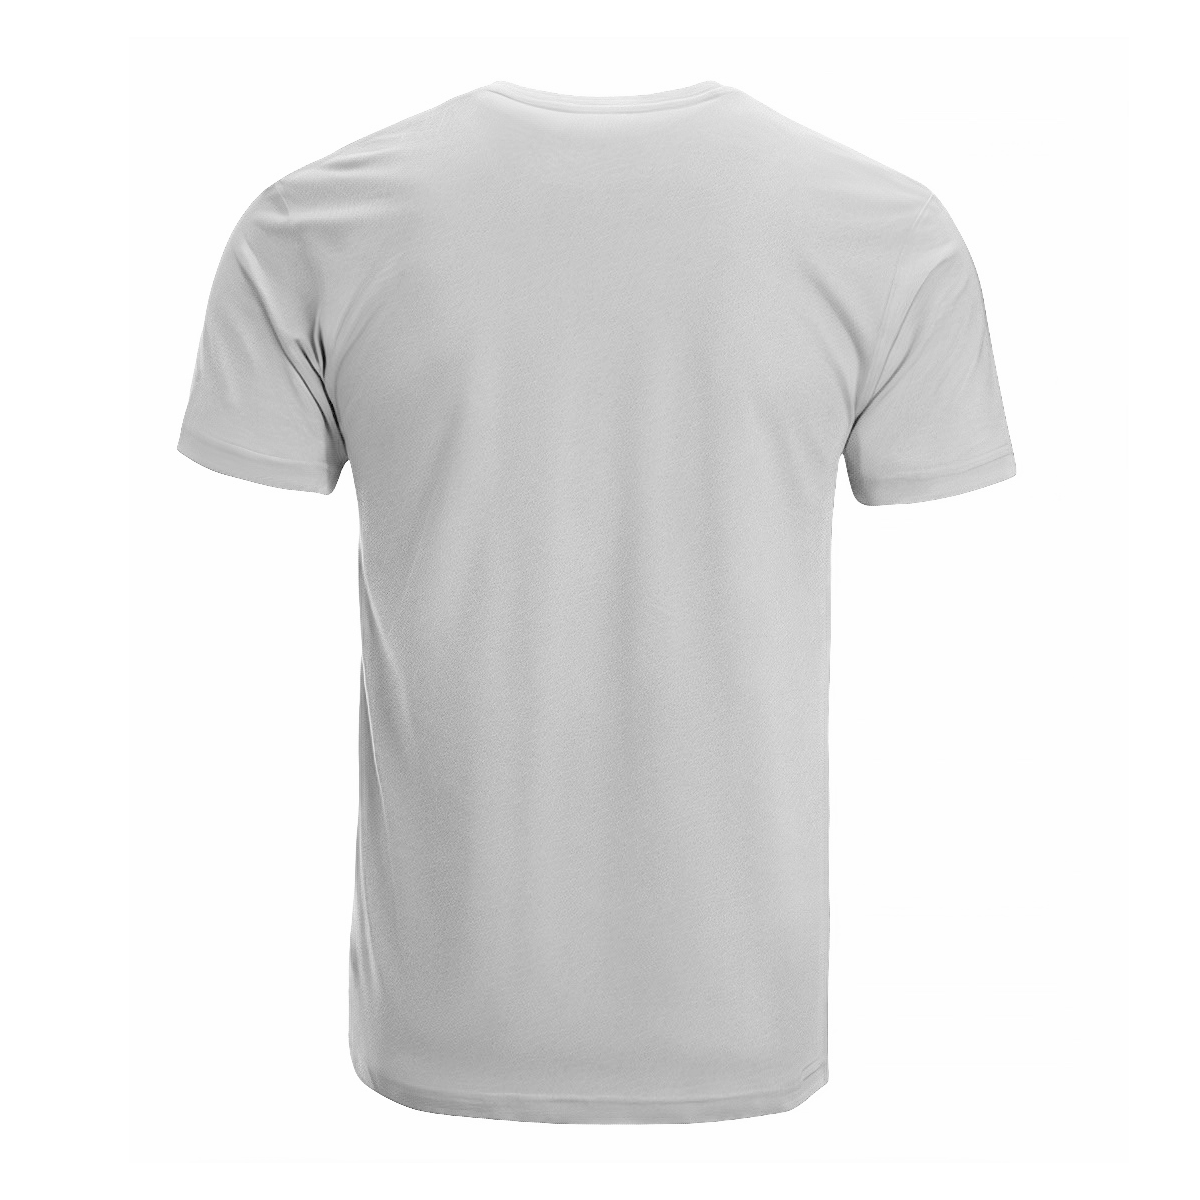 Cunningham Tartan Crest T-shirt - I'm not yelling style